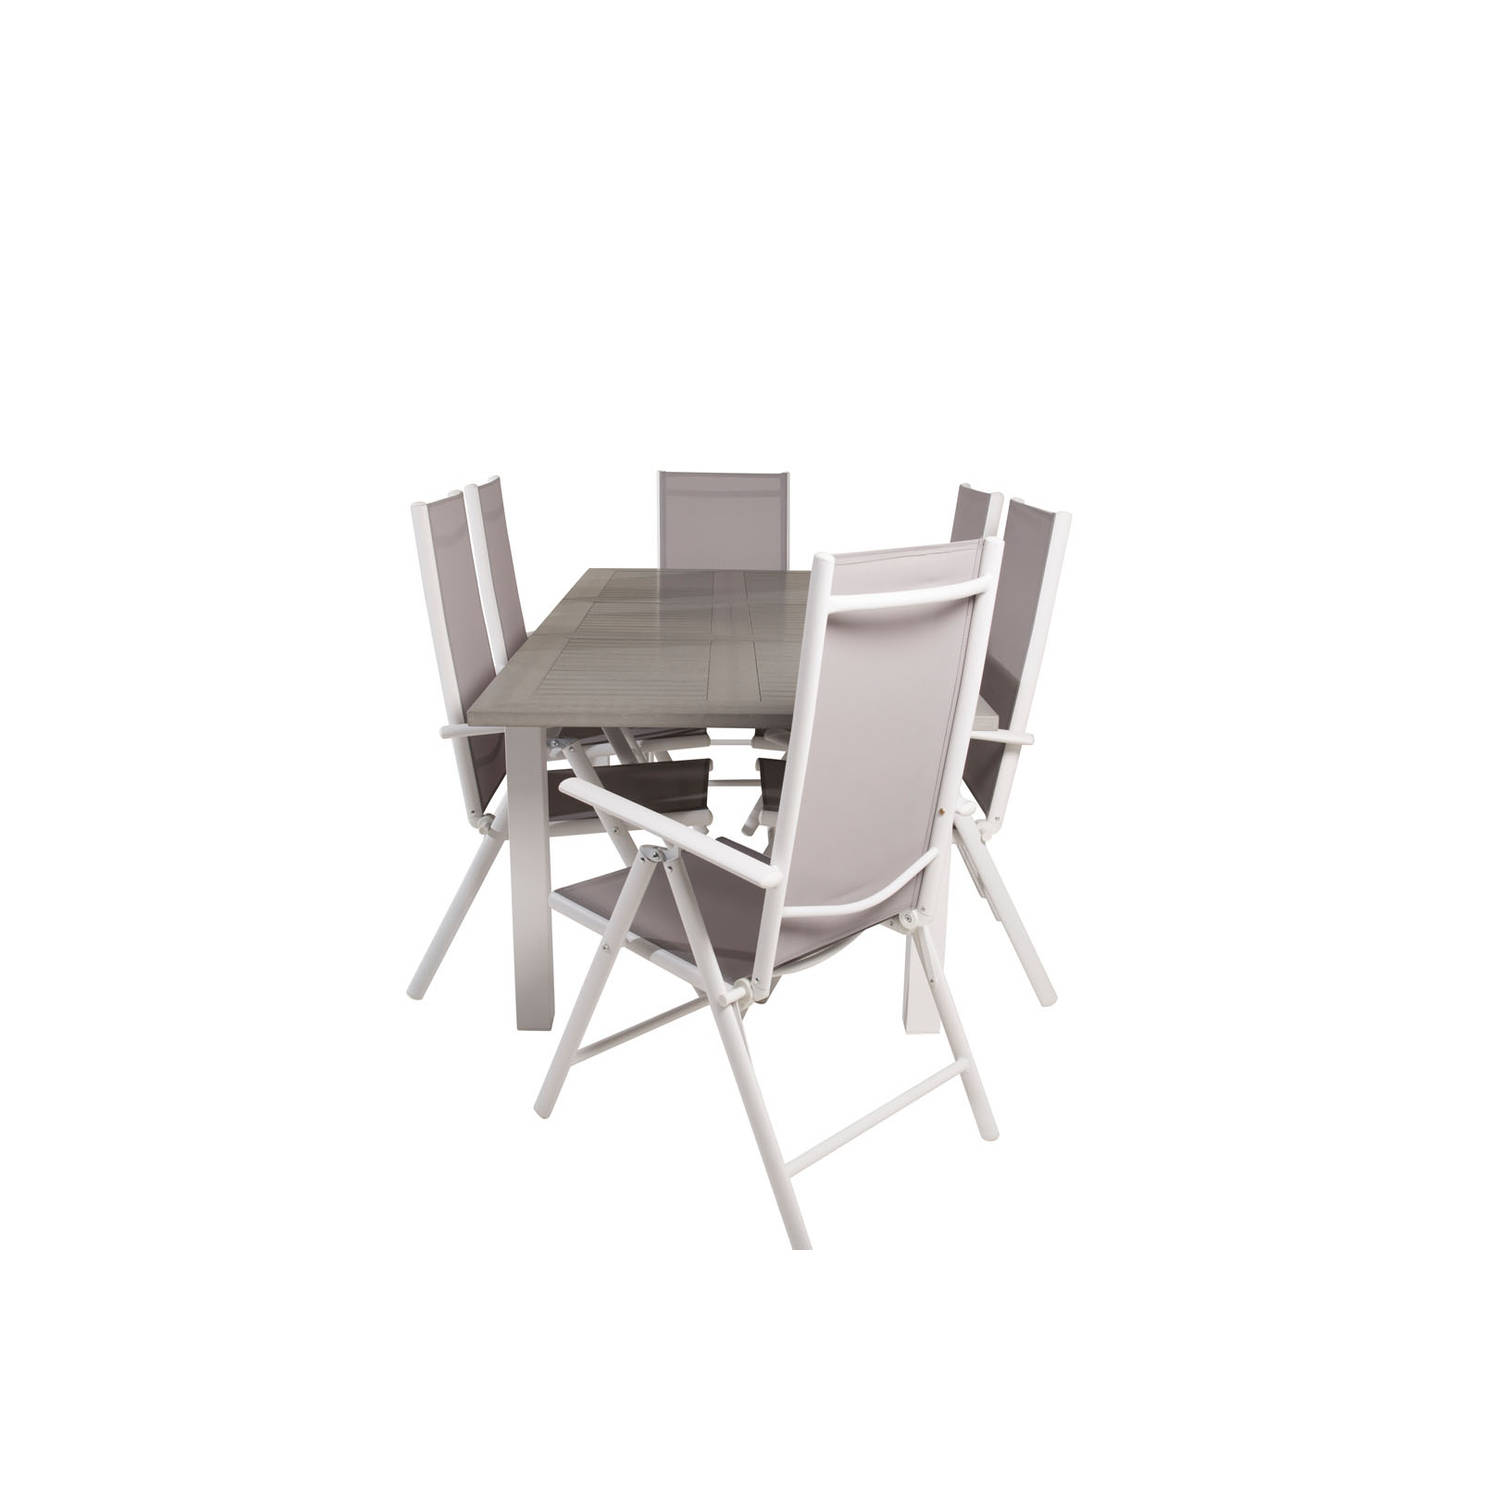 Albany tuinmeubelset tafel 90x152/210cm en 6 stoel Break wit, grijs, crèmekleur.